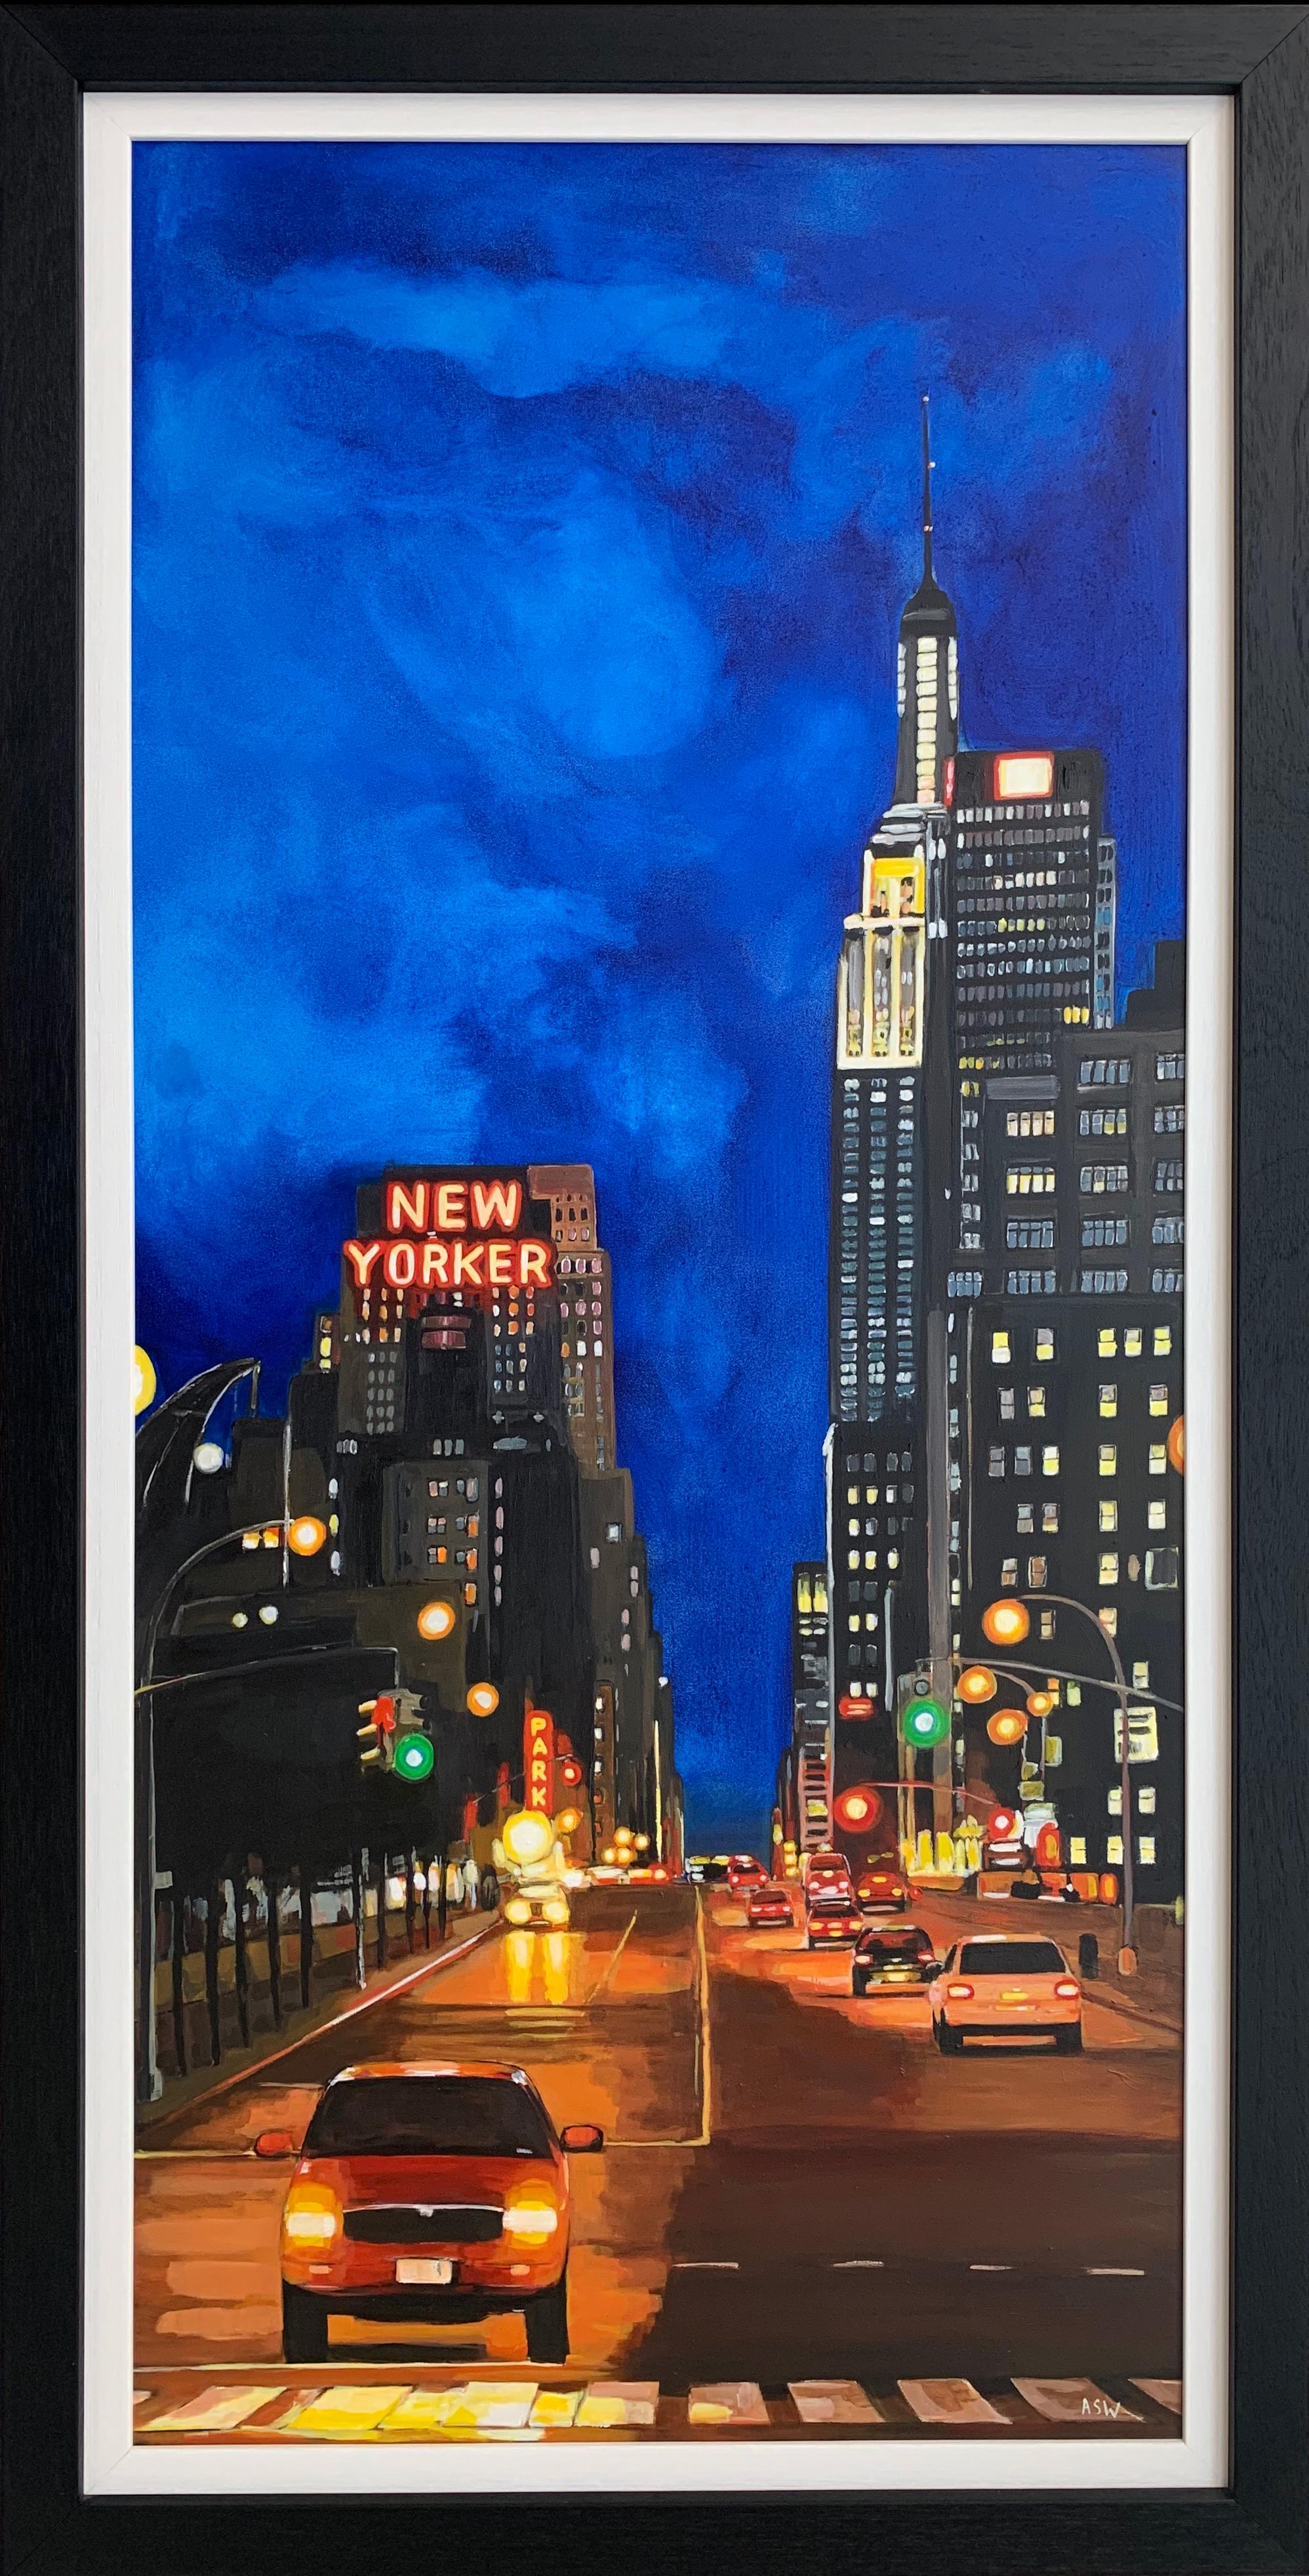 The New Yorker Hotel 8th Avenue Manhattan New York City by British Urban Artist 